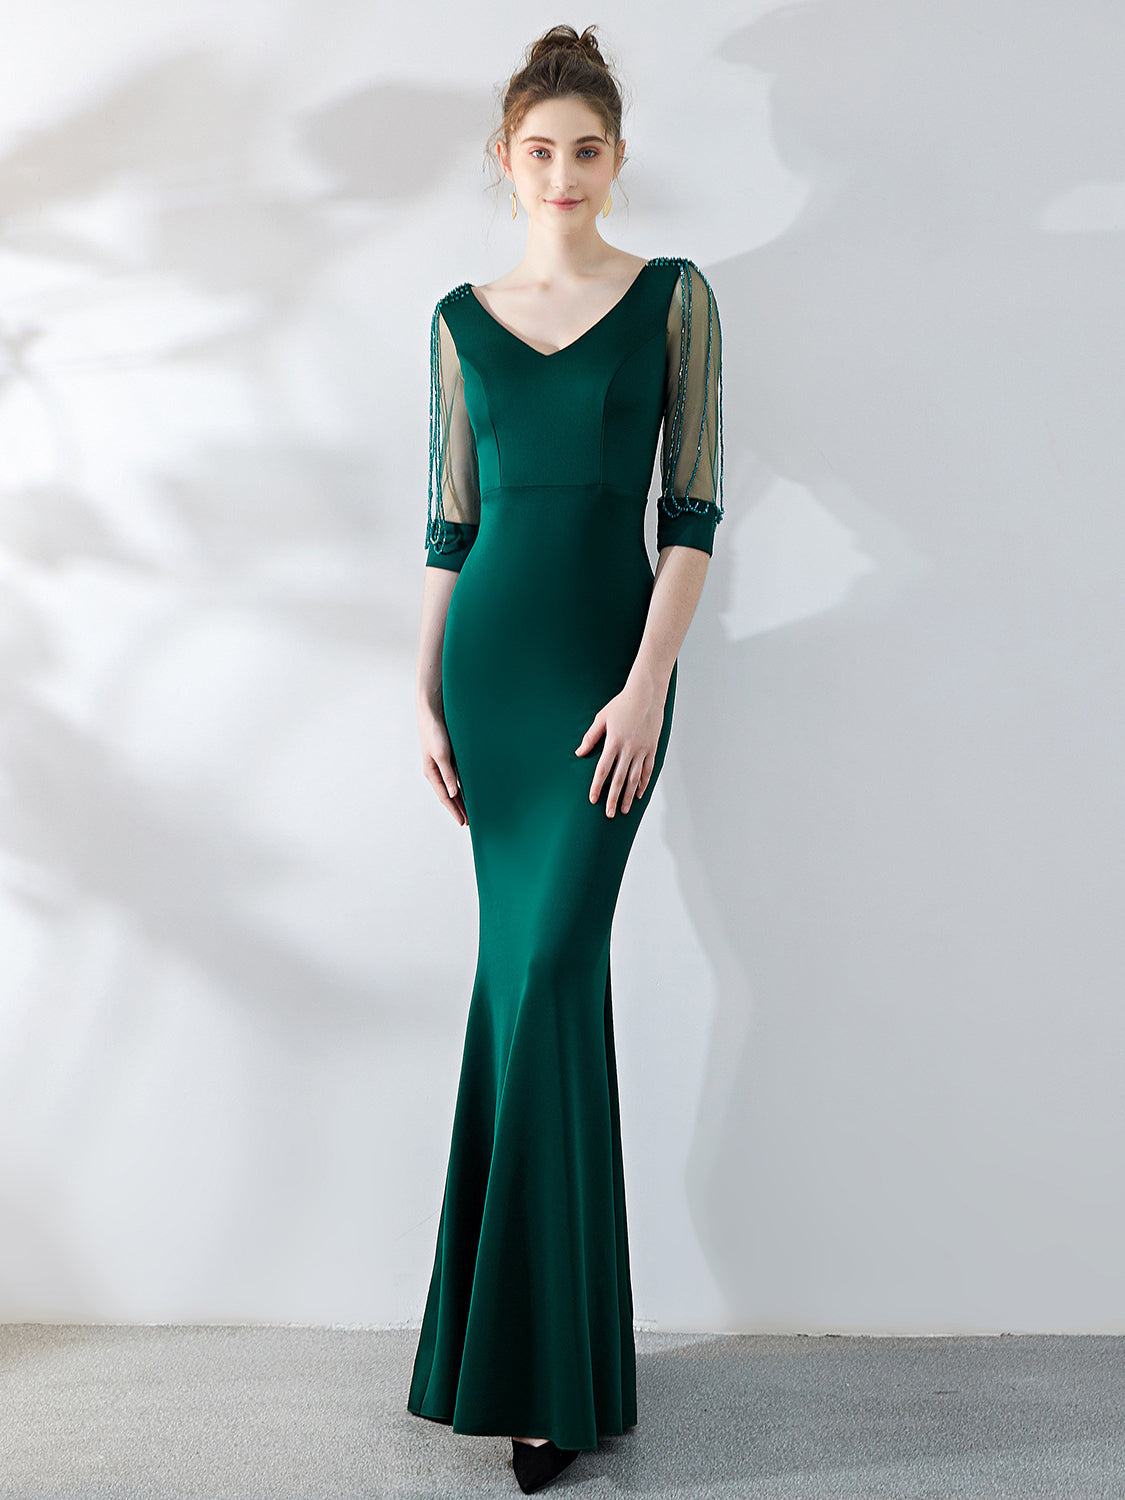 Sexy slim fishtail dress evening dress – MagChic